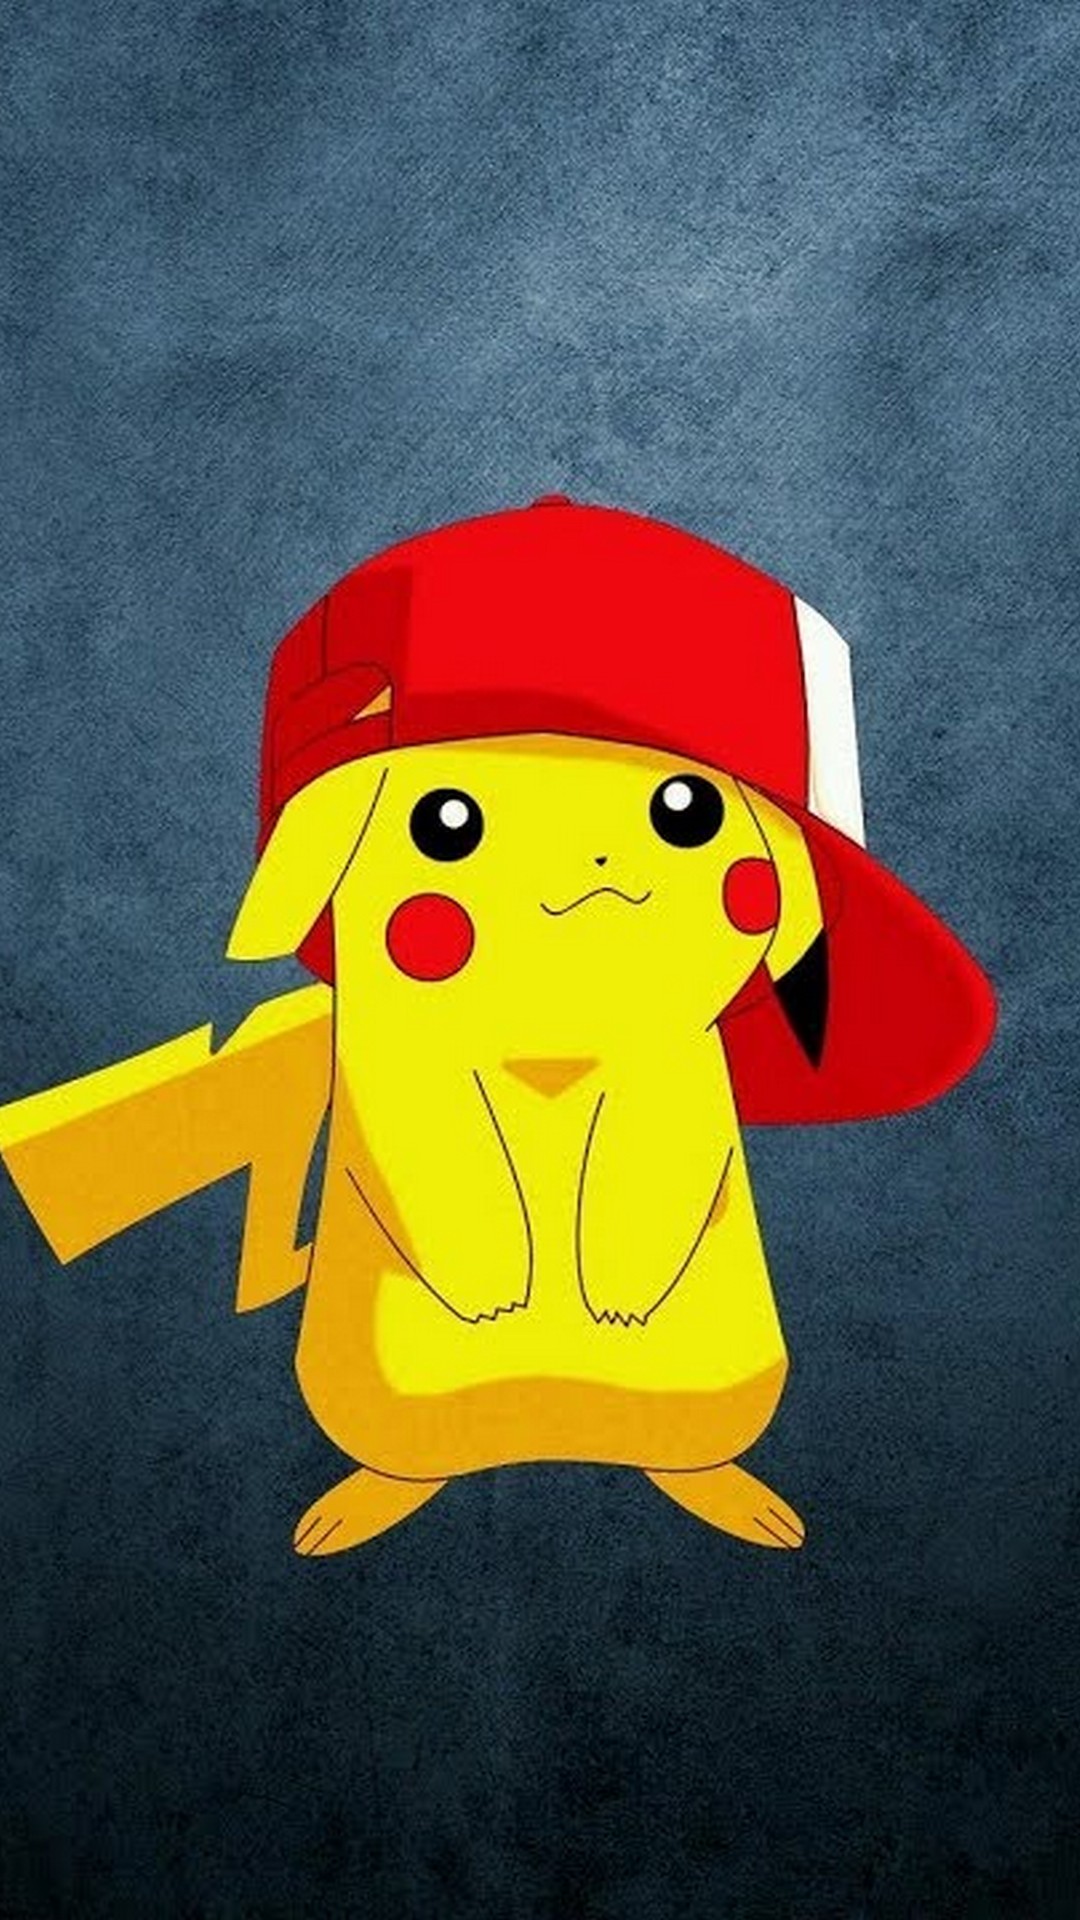 Hd Pikachu Wallpaper For Mobile